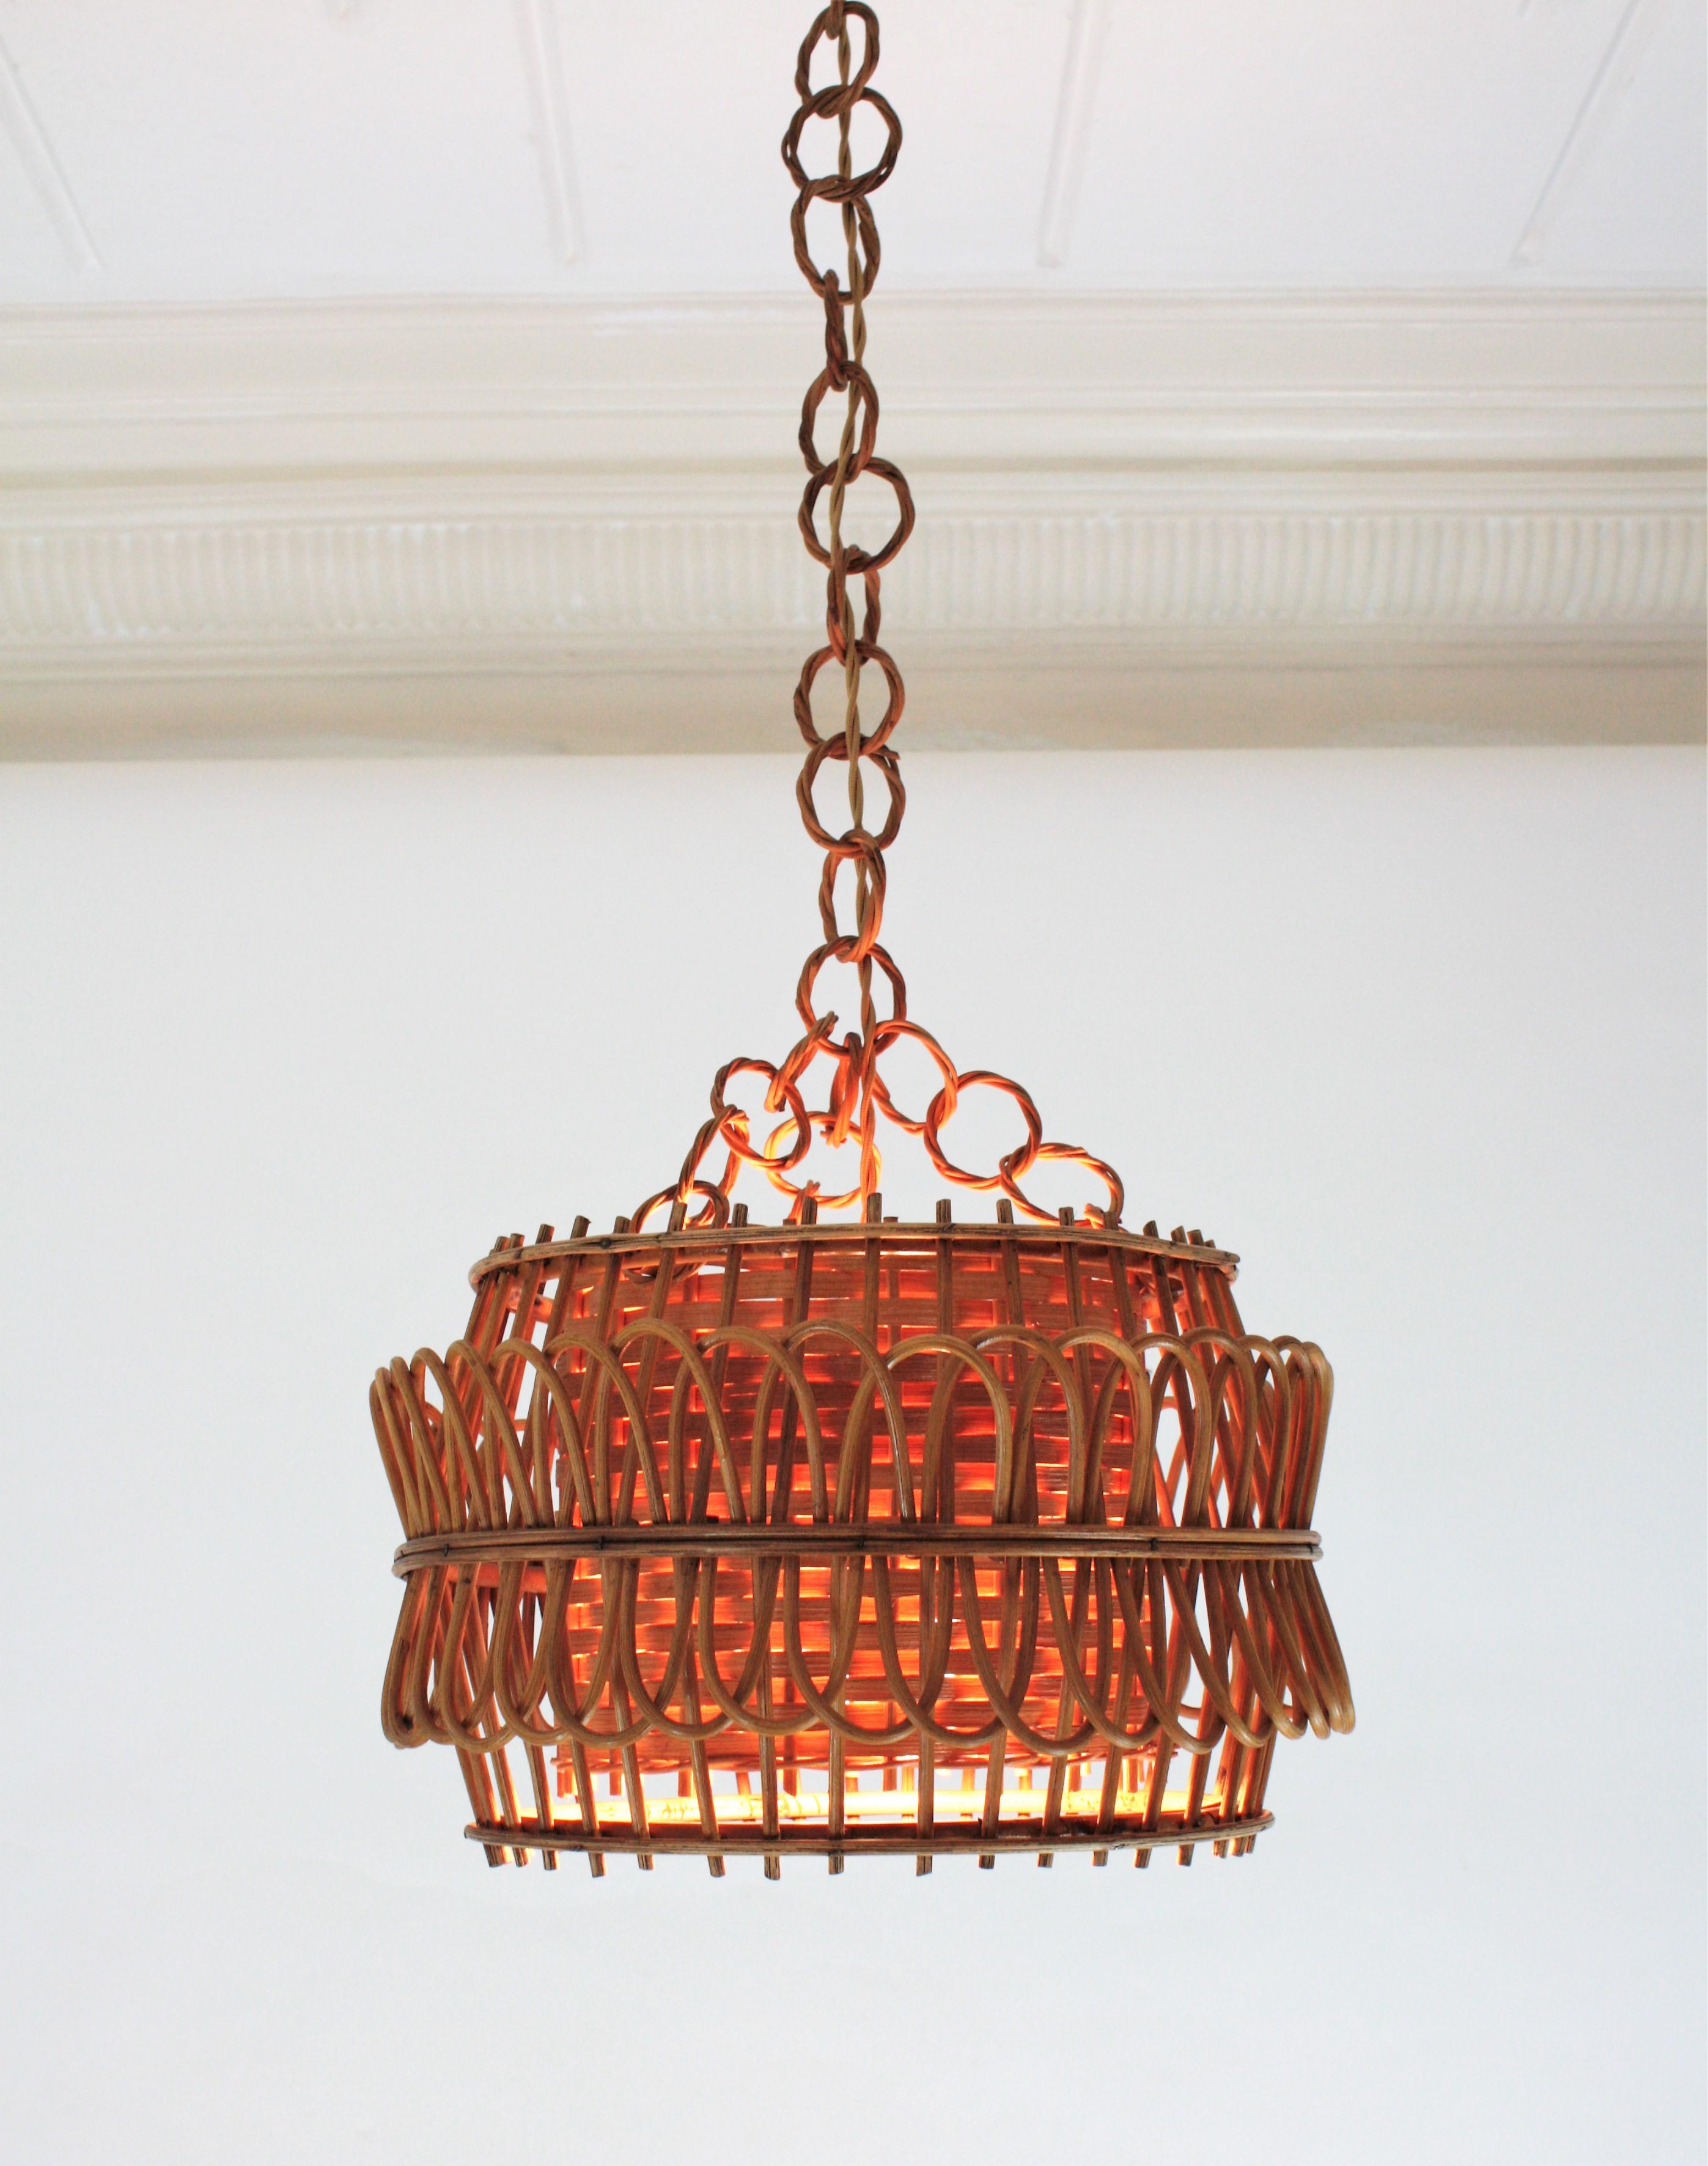 Spanish Modernist Rattan Pendant Lamp / Hanging Light with Woven Wicker Shade 2